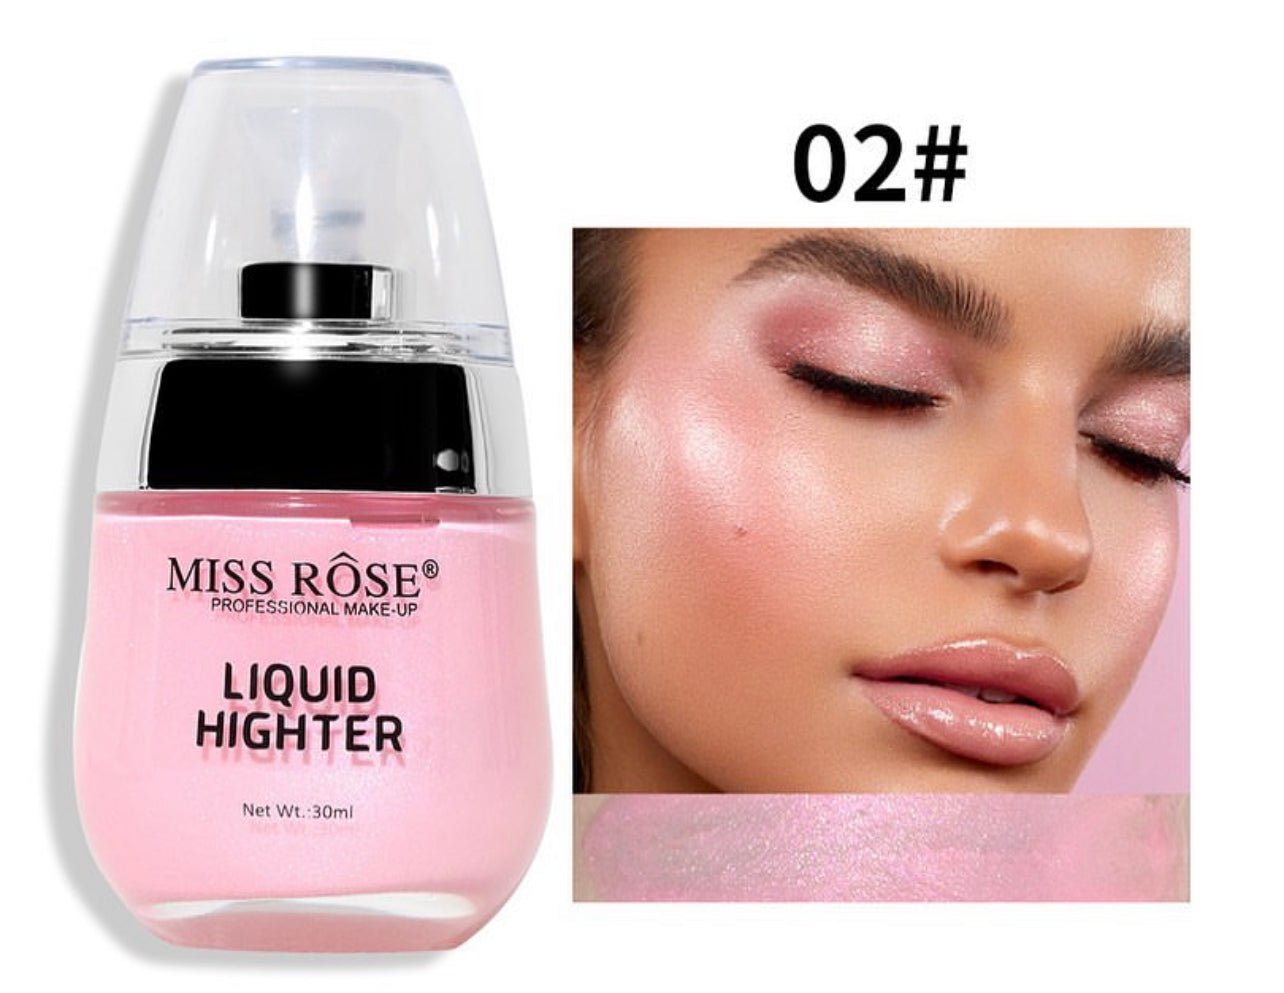 Miss Rose Liquid Highter